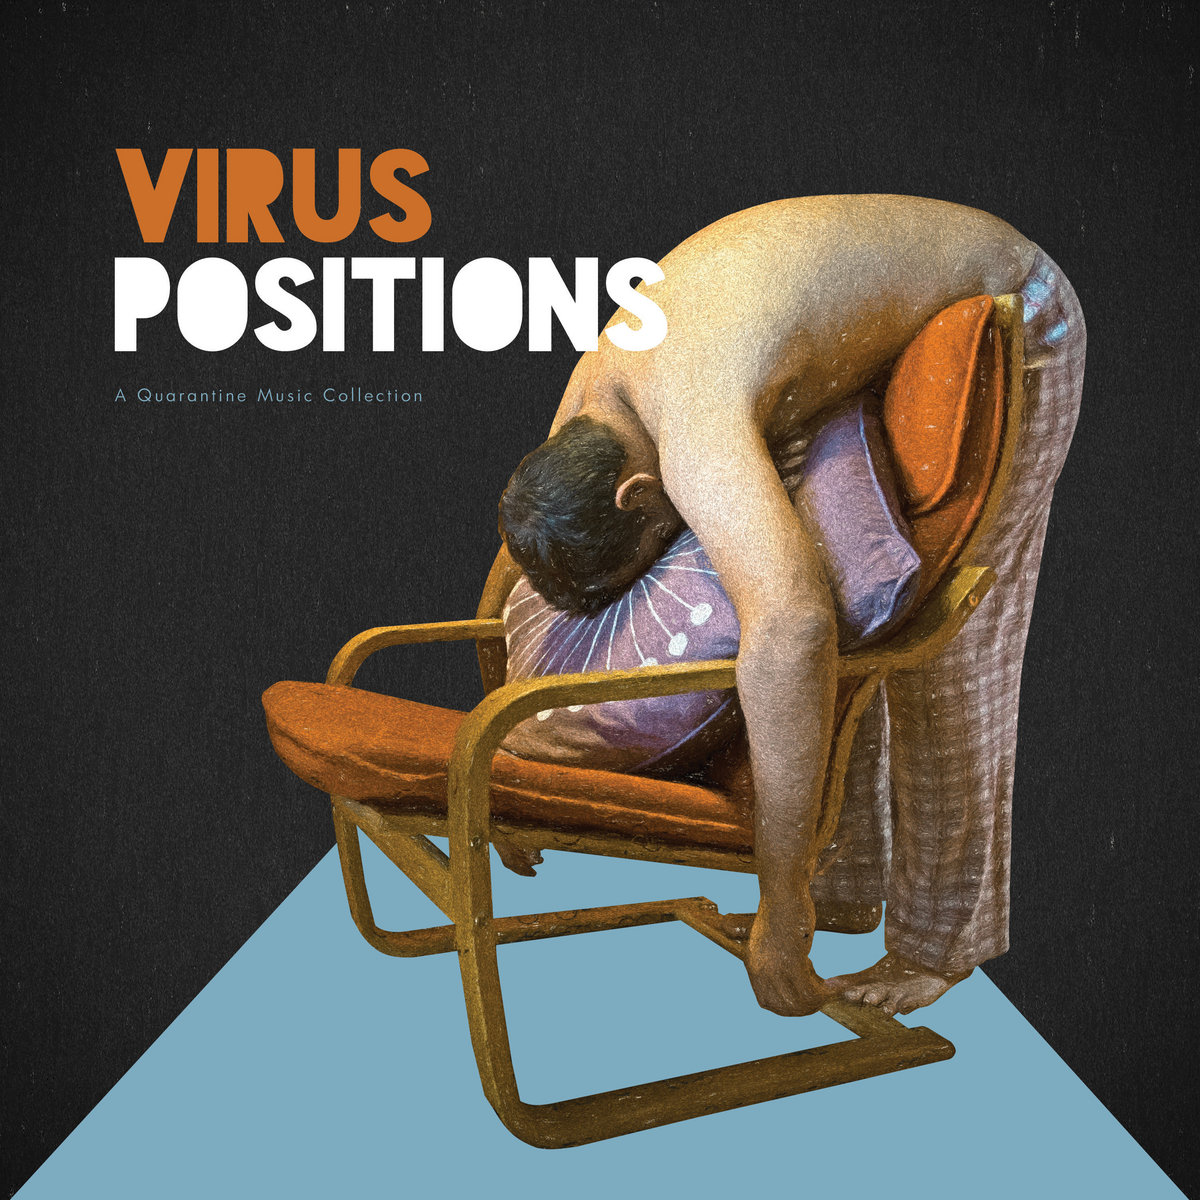 Focus Découverte – Inner Ear Records – Virus Positions (A Quarantine Music Collection)